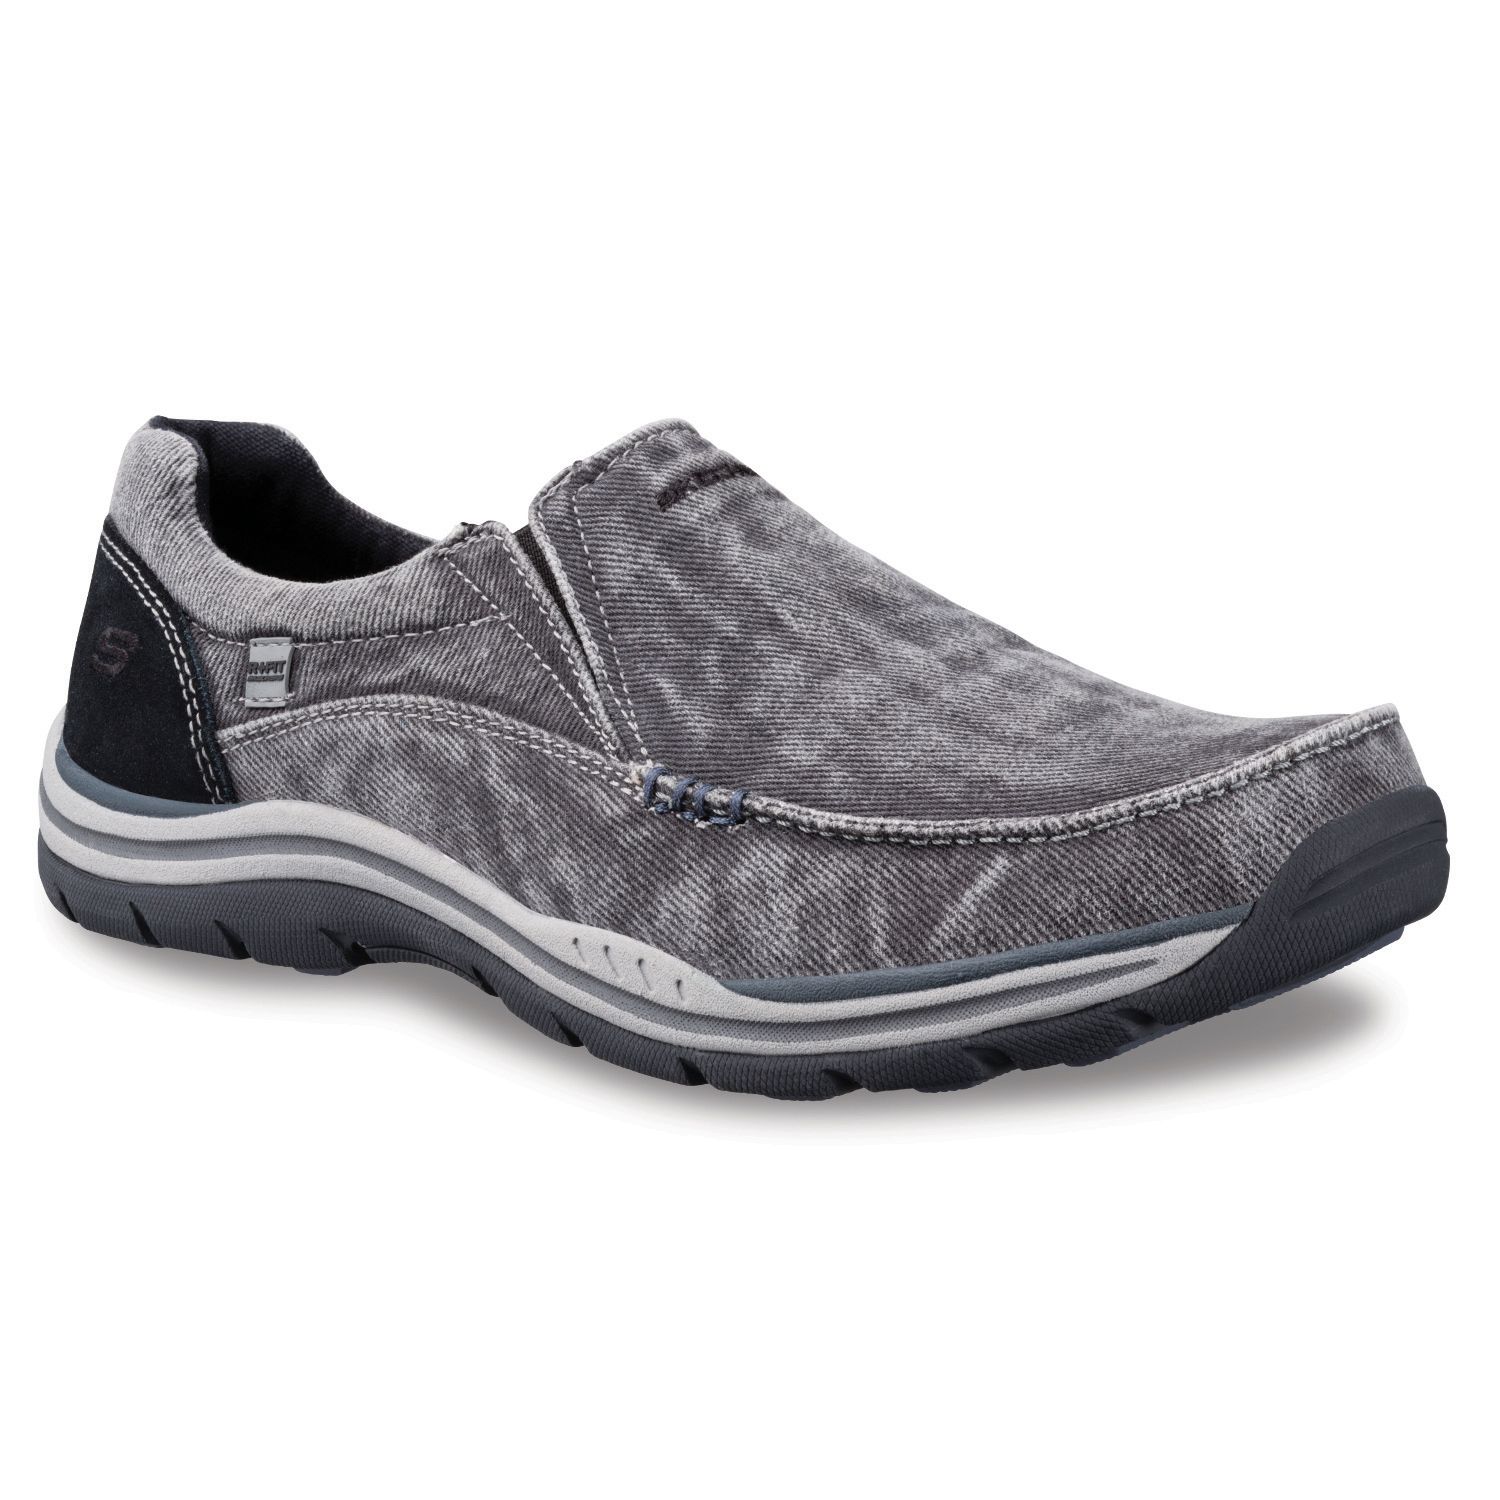 skechers men's avillo relaxed fit shoes